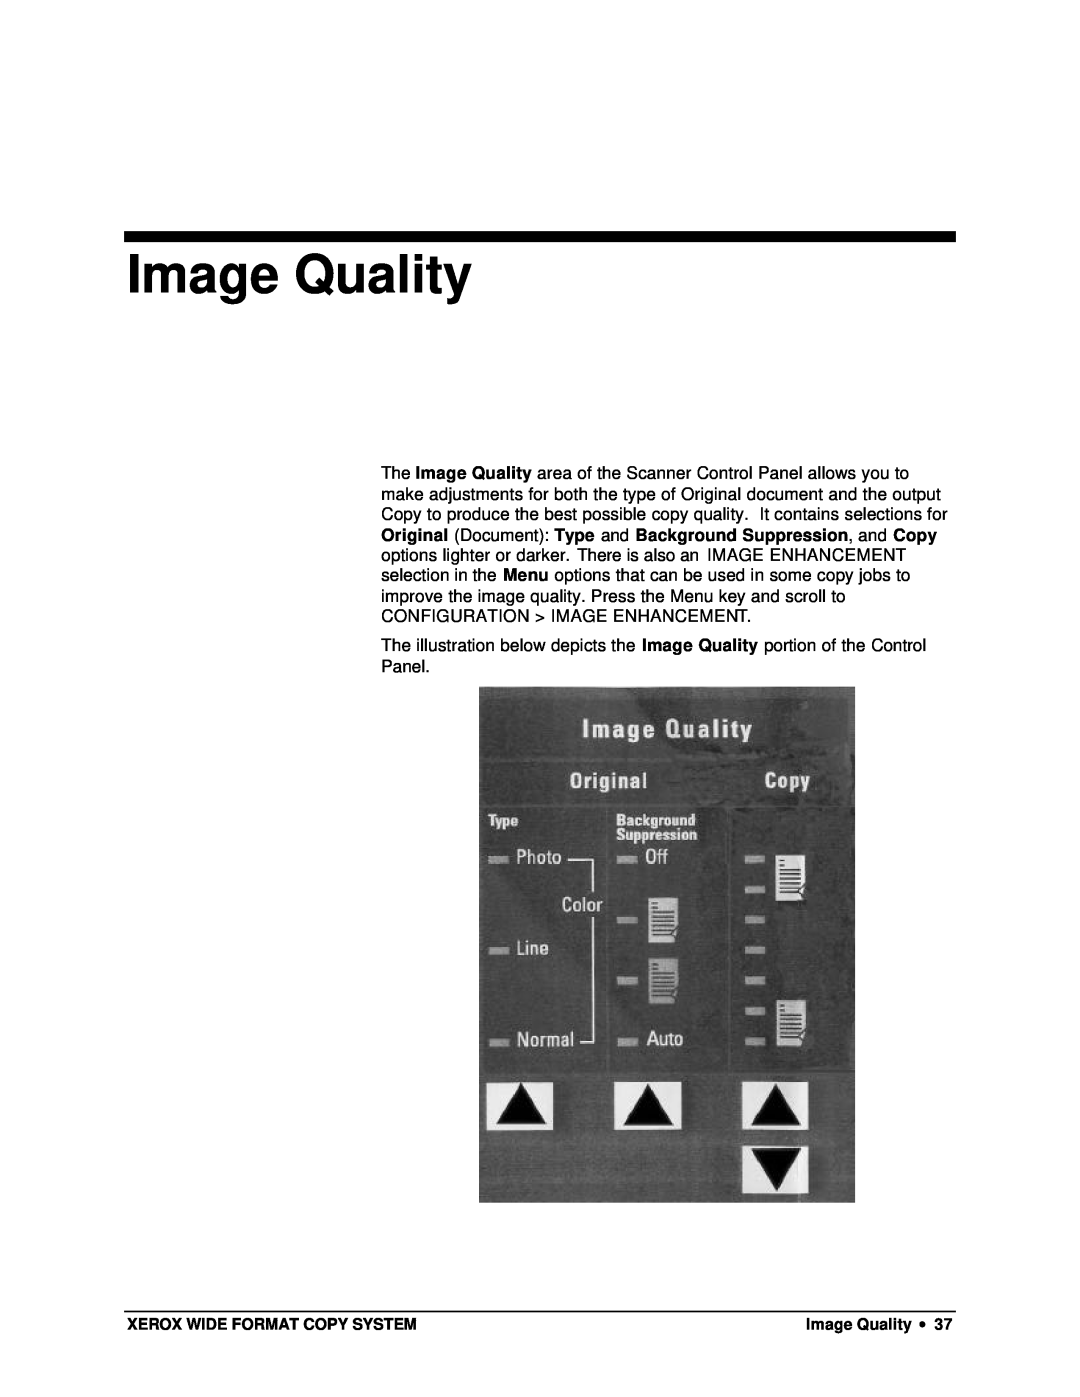 Xerox X2, 8825, 8850, 8830 manual Image Quality 